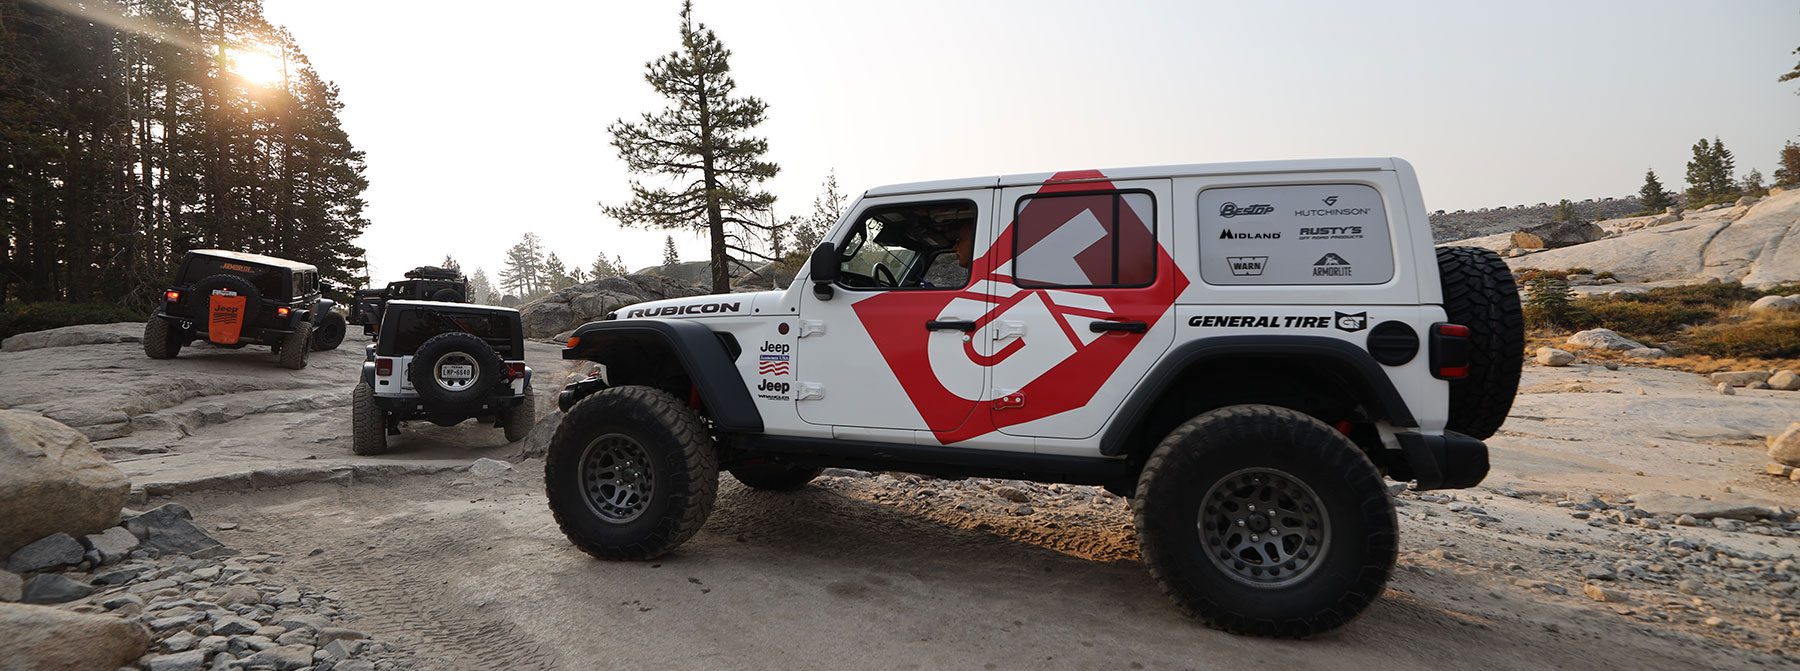 jeep with sponsor logos